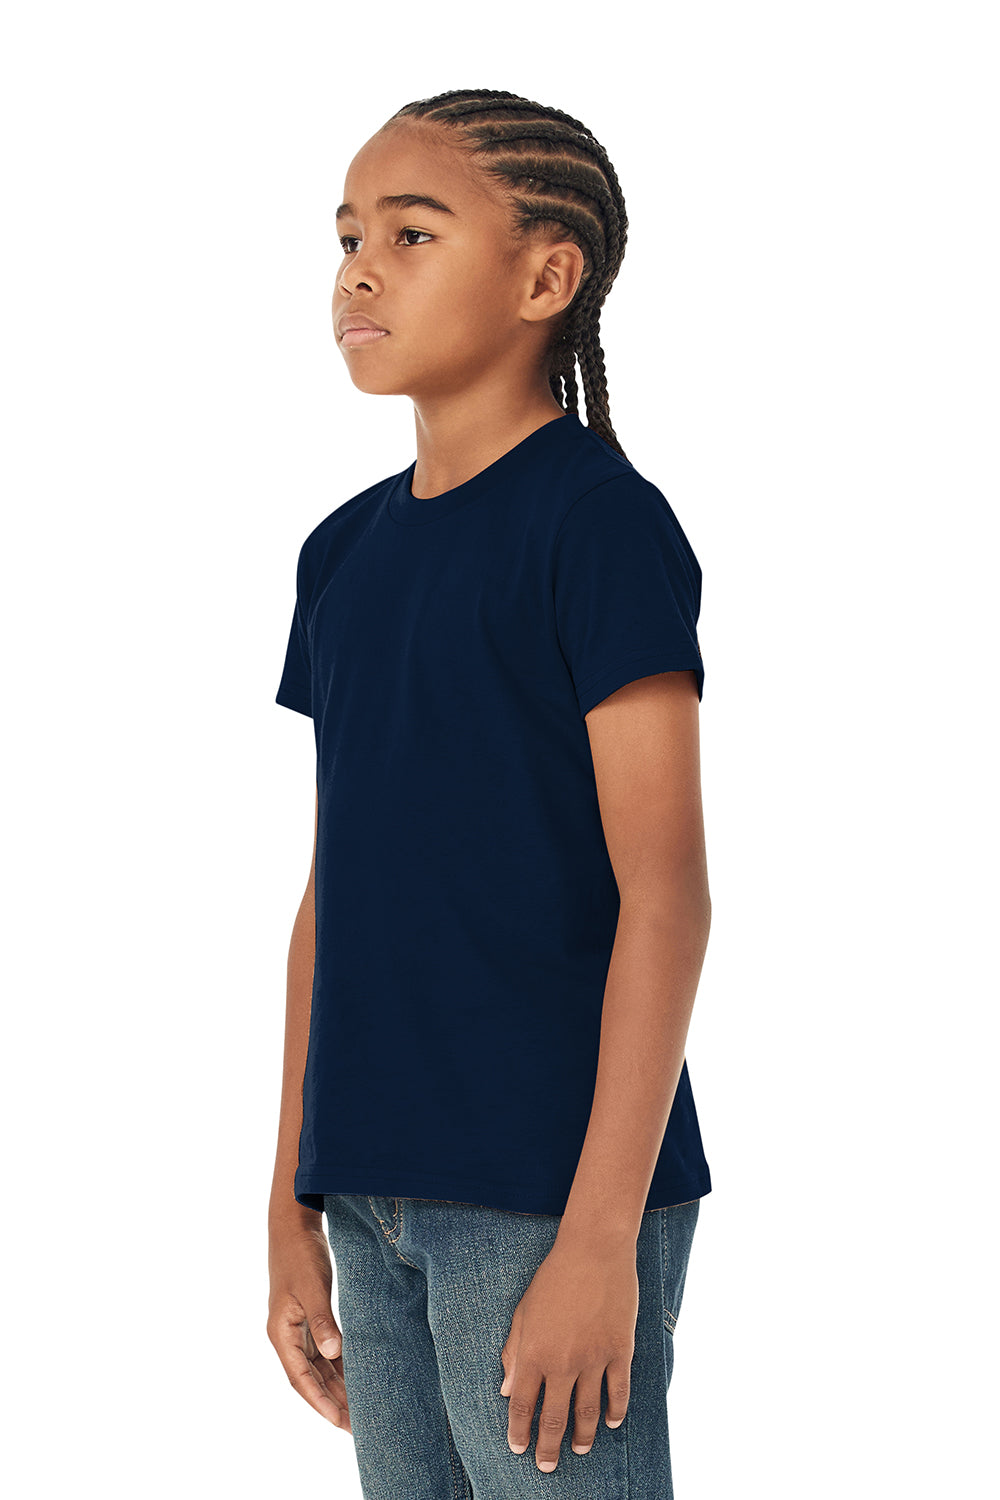 Bella + Canvas 3001Y Youth Jersey Short Sleeve Crewneck T-Shirt Navy Blue Model 3Q